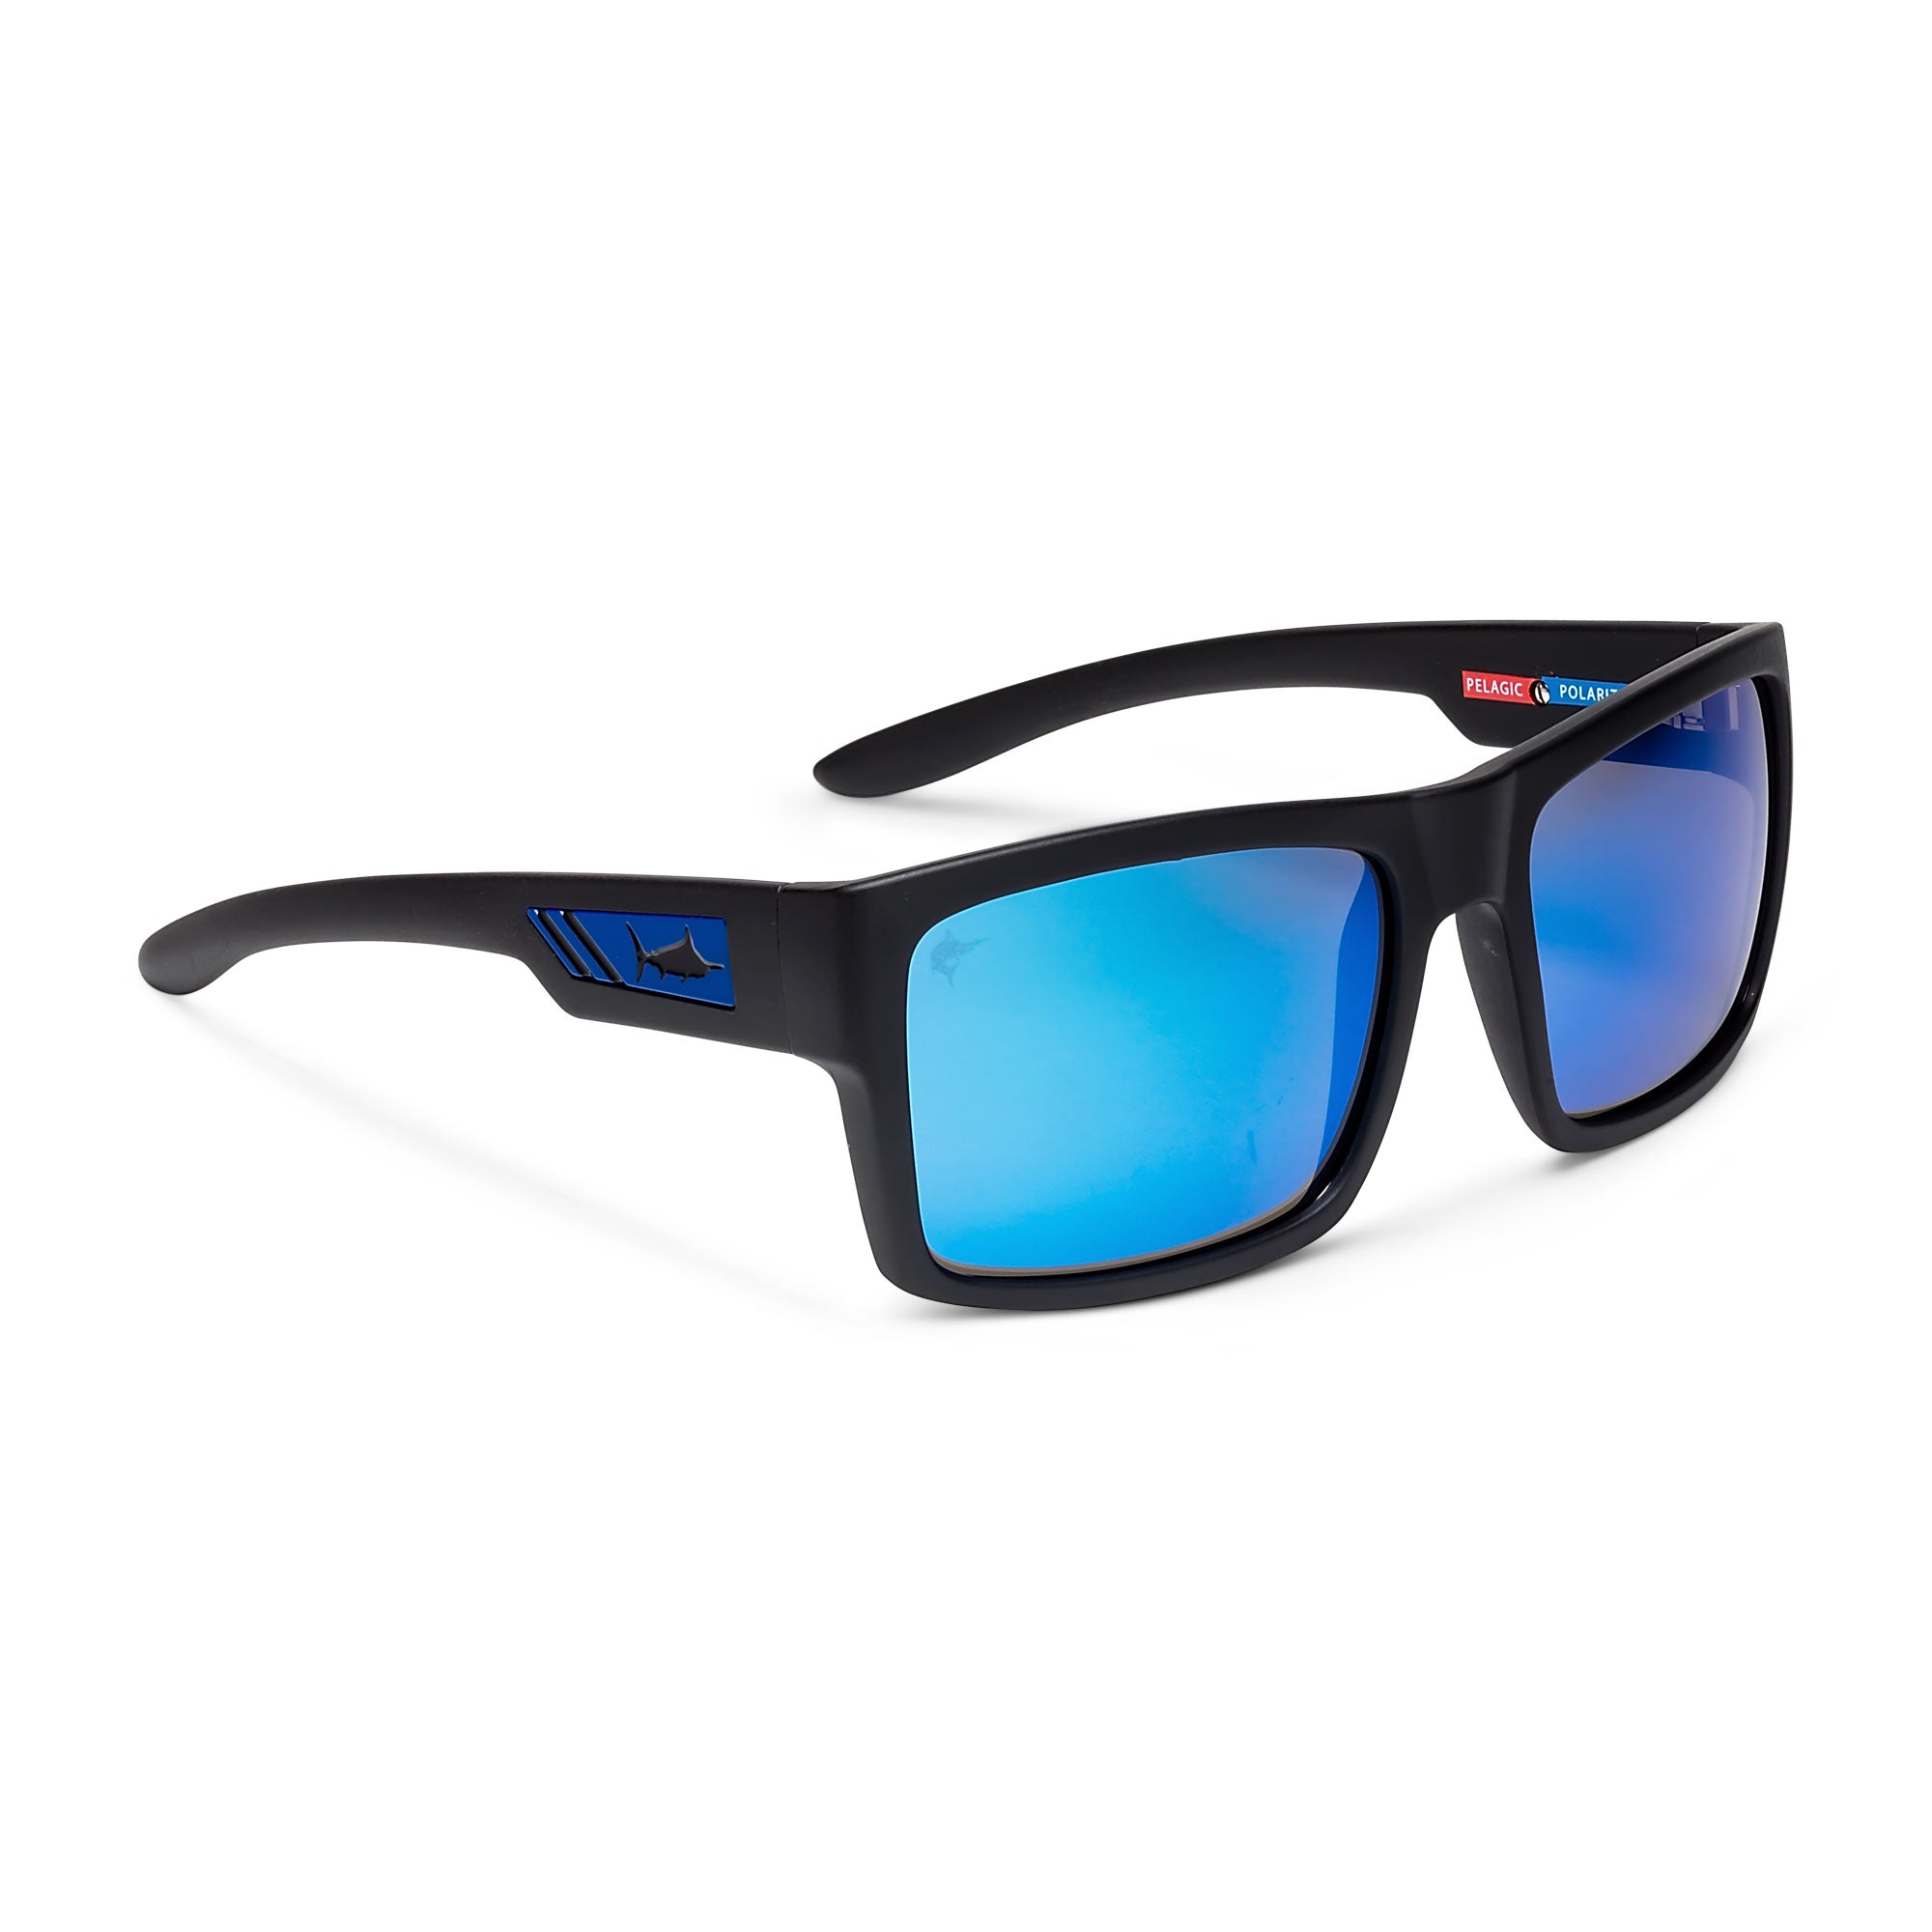 Cook Shark's new aluminum magnesium sunglasses men's sunglasses HD  polarized driving drivers color glasses tide